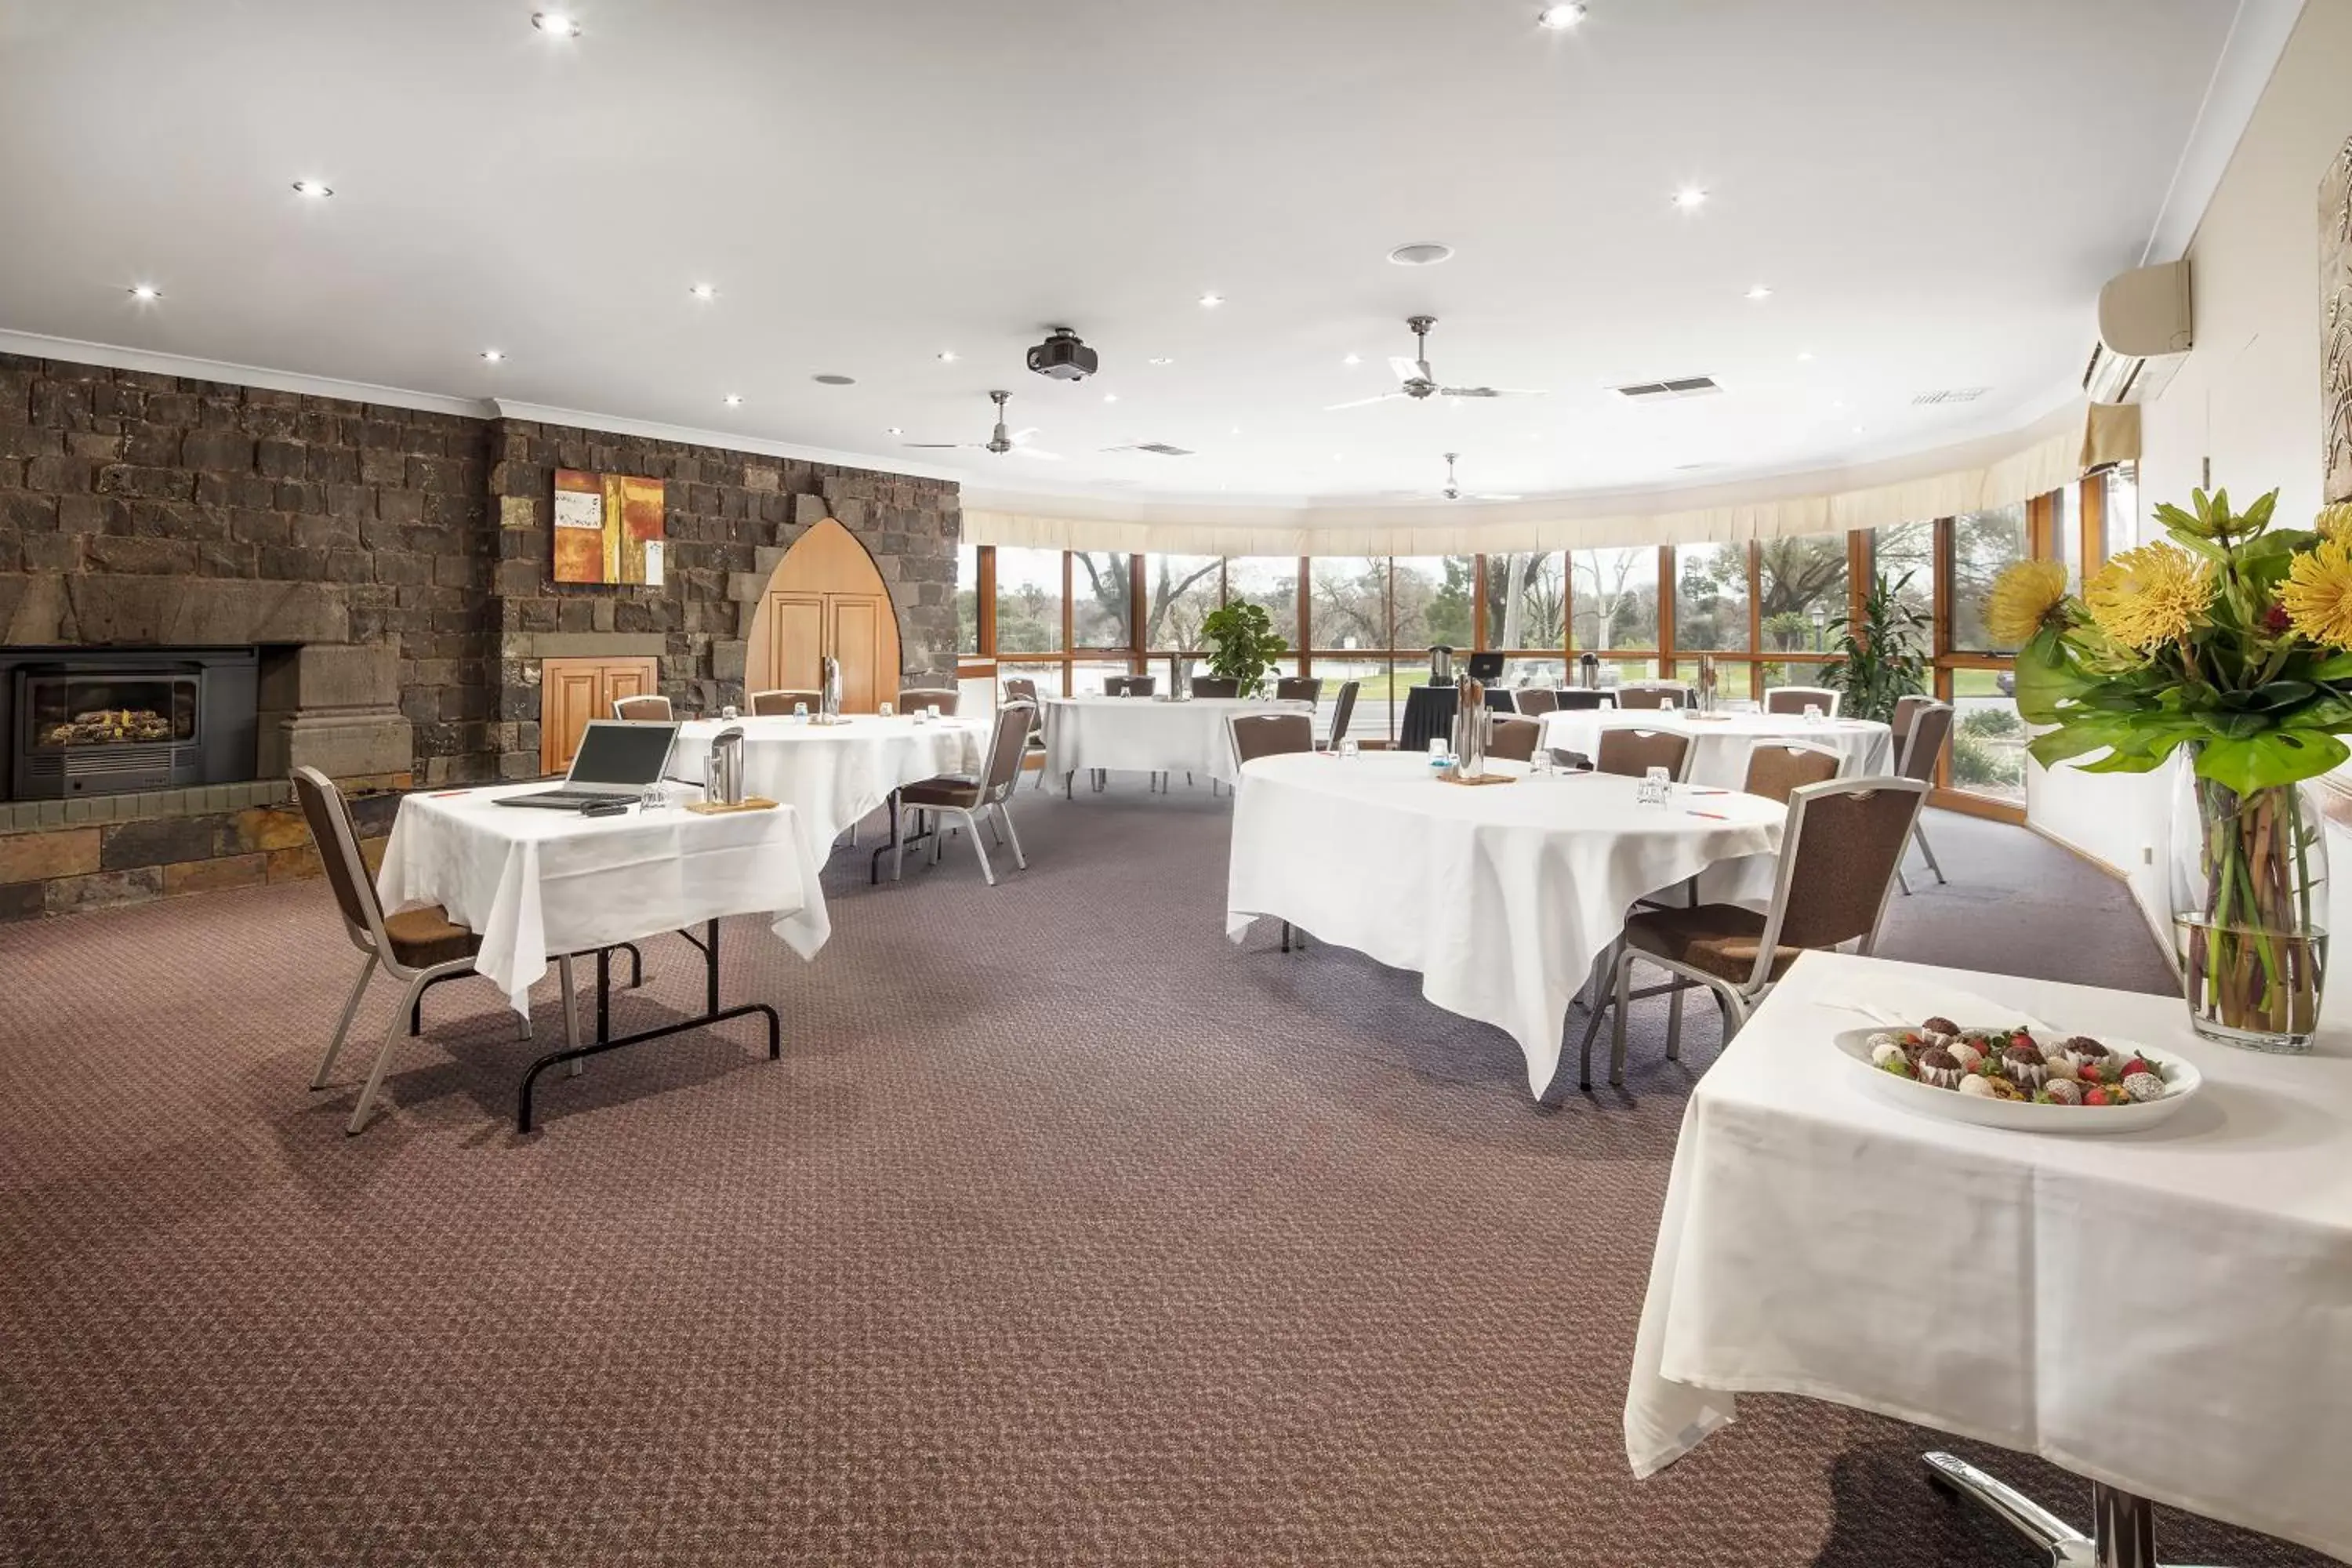 Banquet/Function facilities, Restaurant/Places to Eat in Julie-Anna, Bendigo